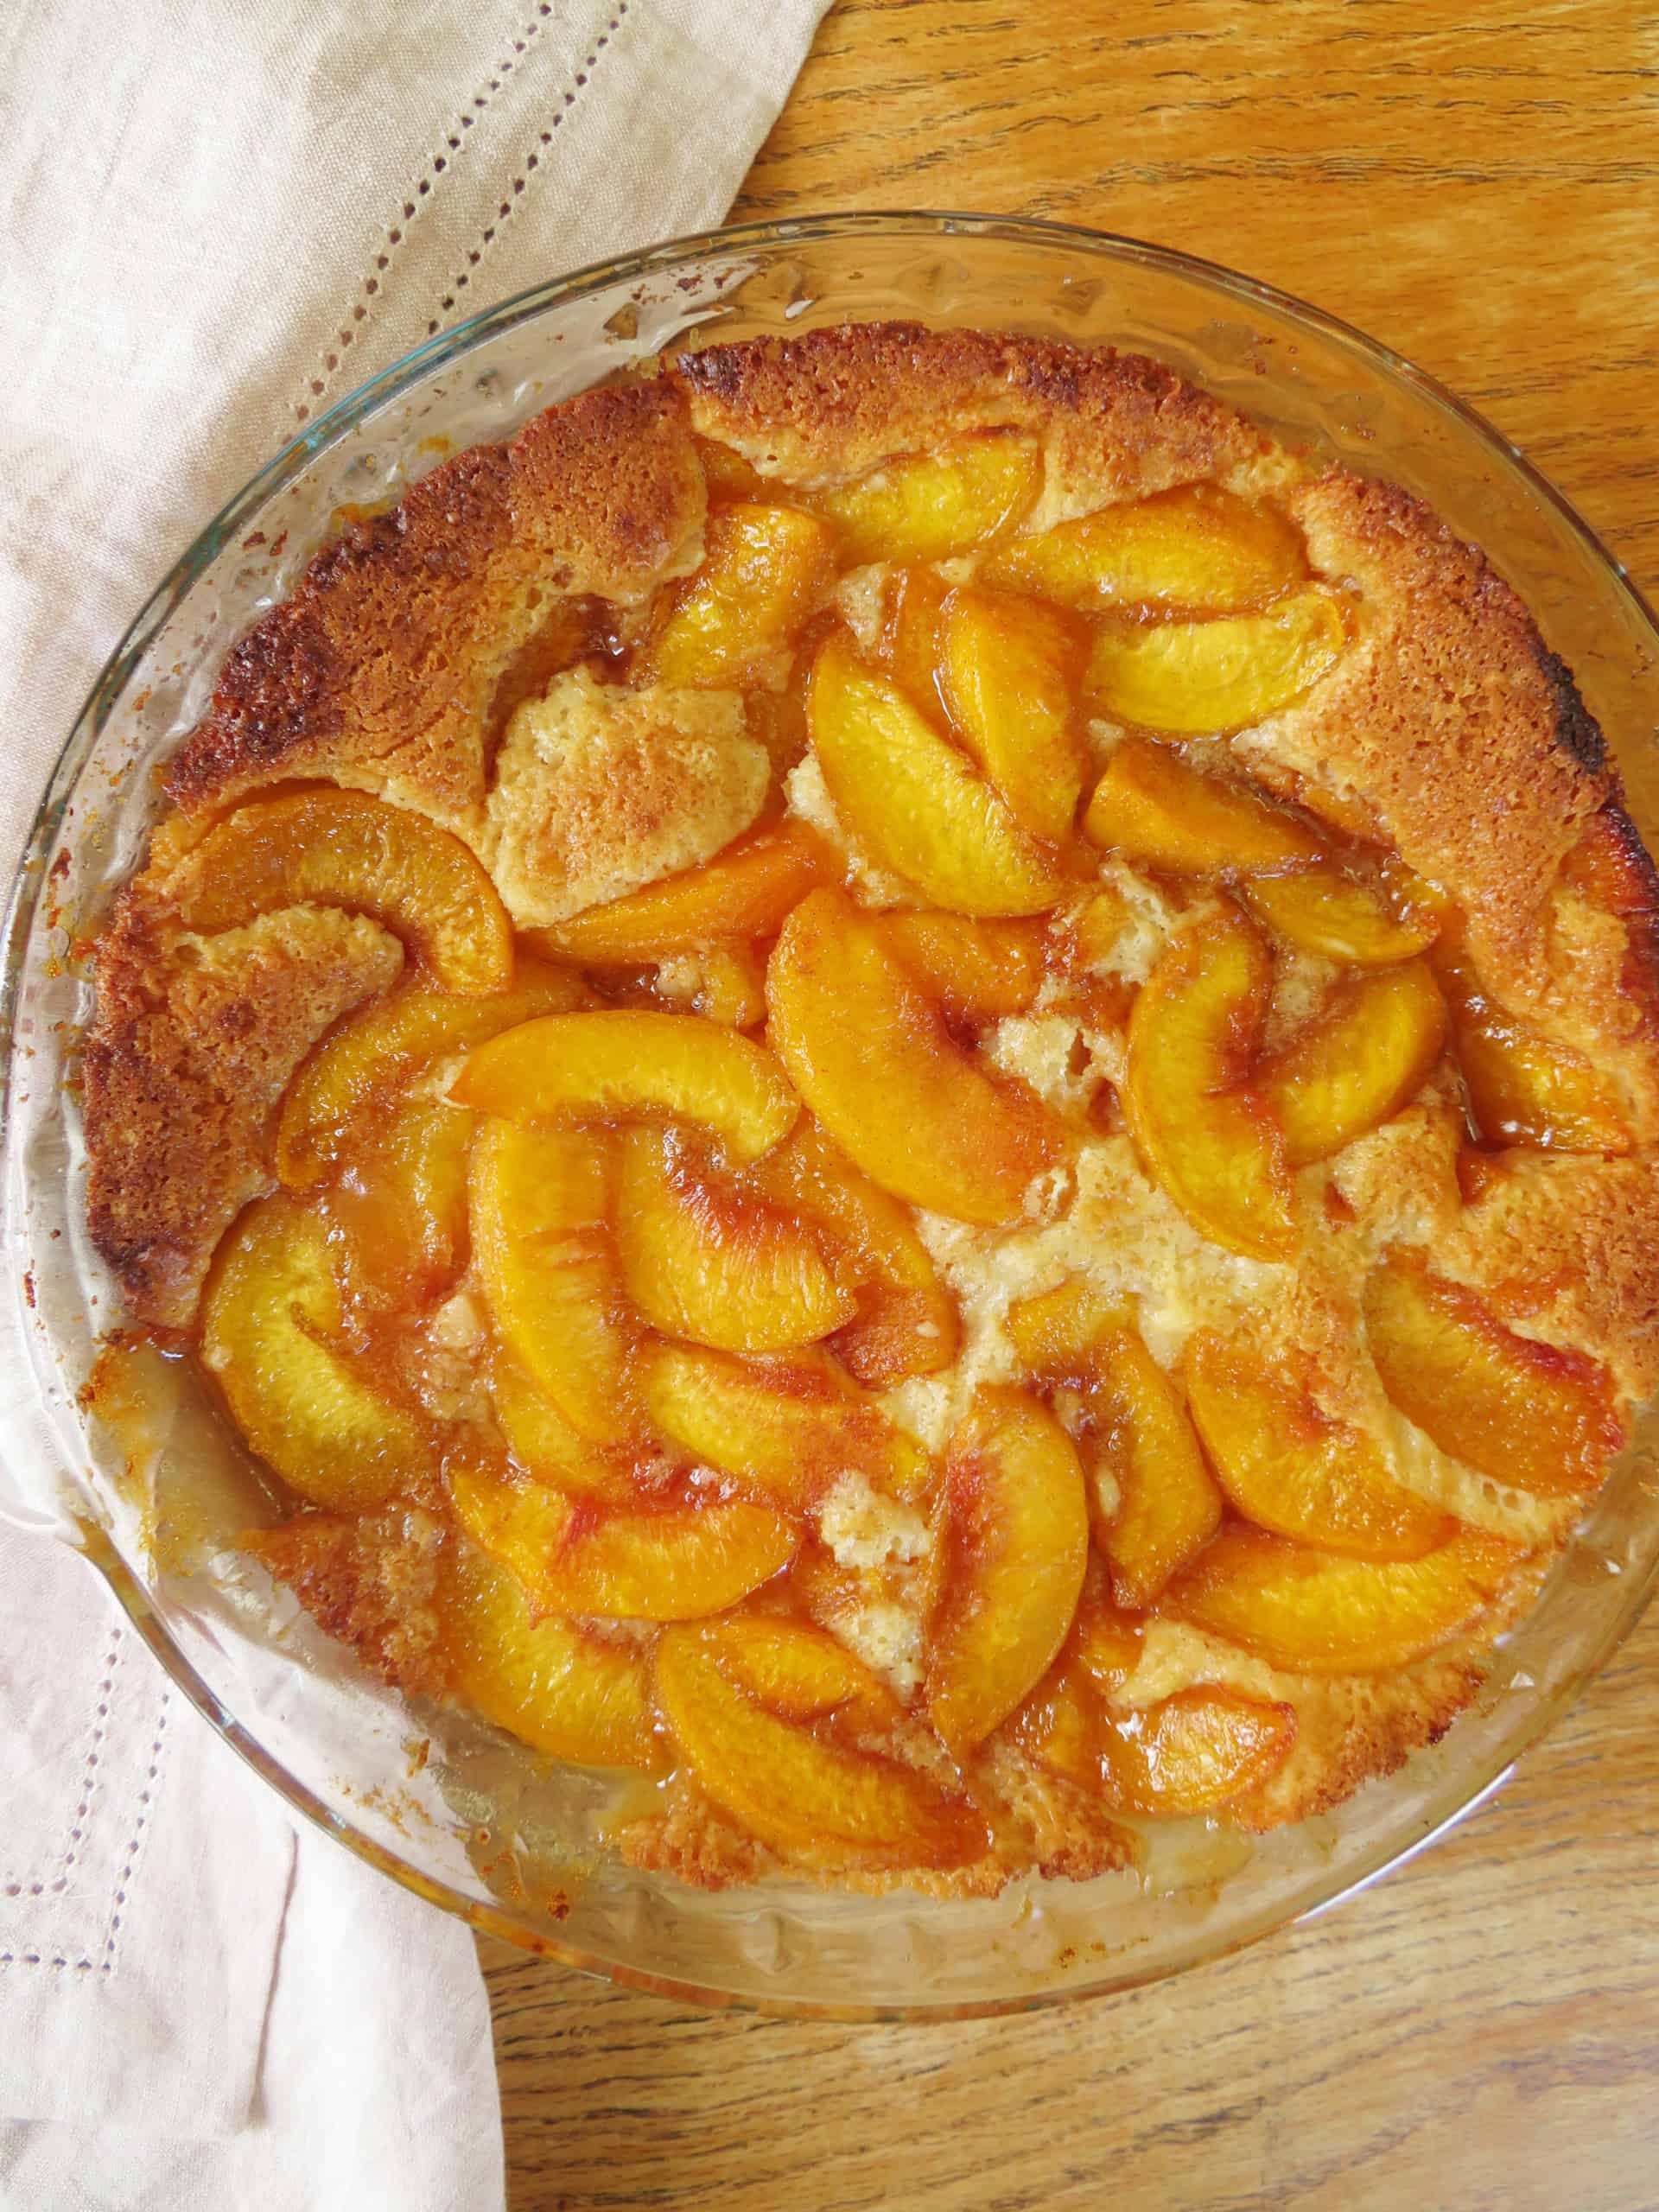 easy peach cobbler recipe